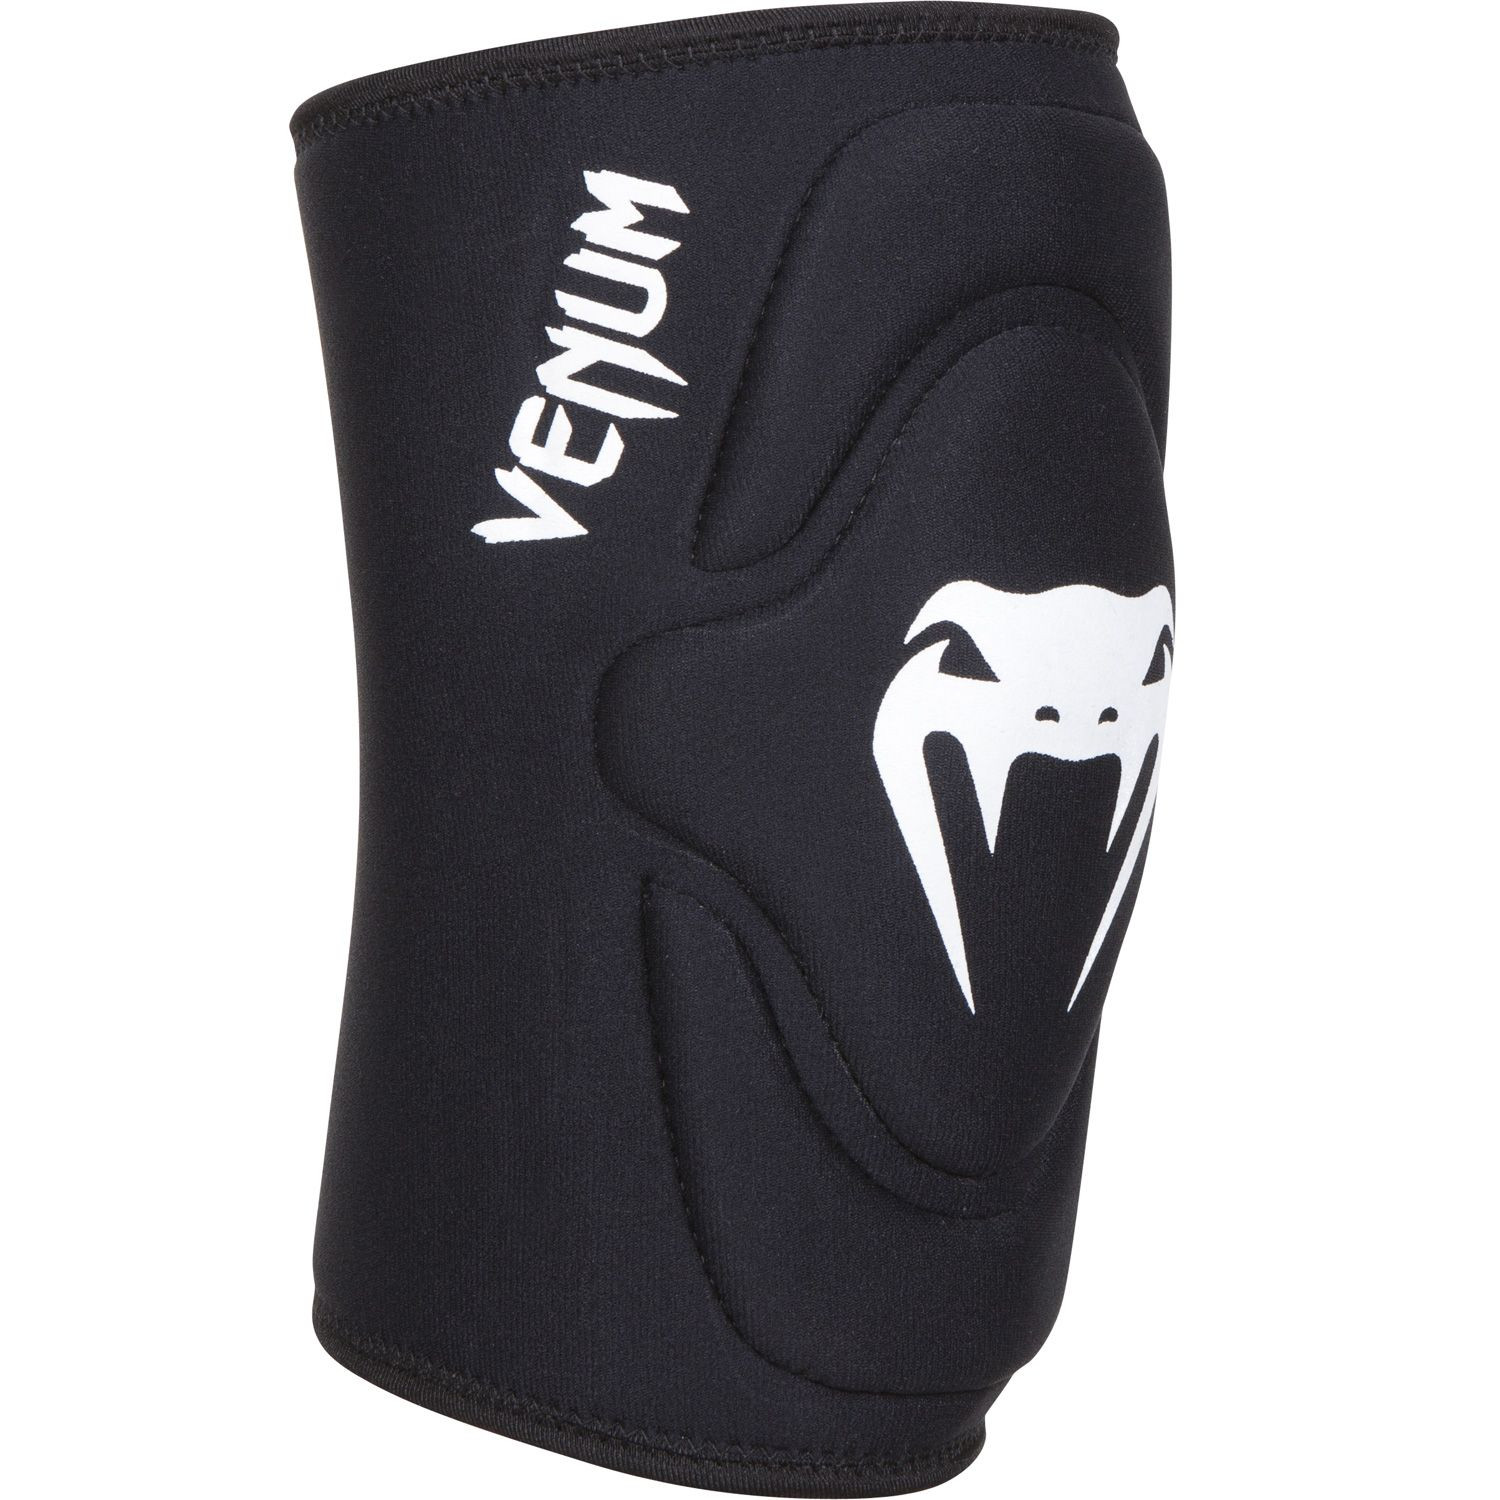 Venum Wrestling Knee Pads - Black/White - Click Image to Close